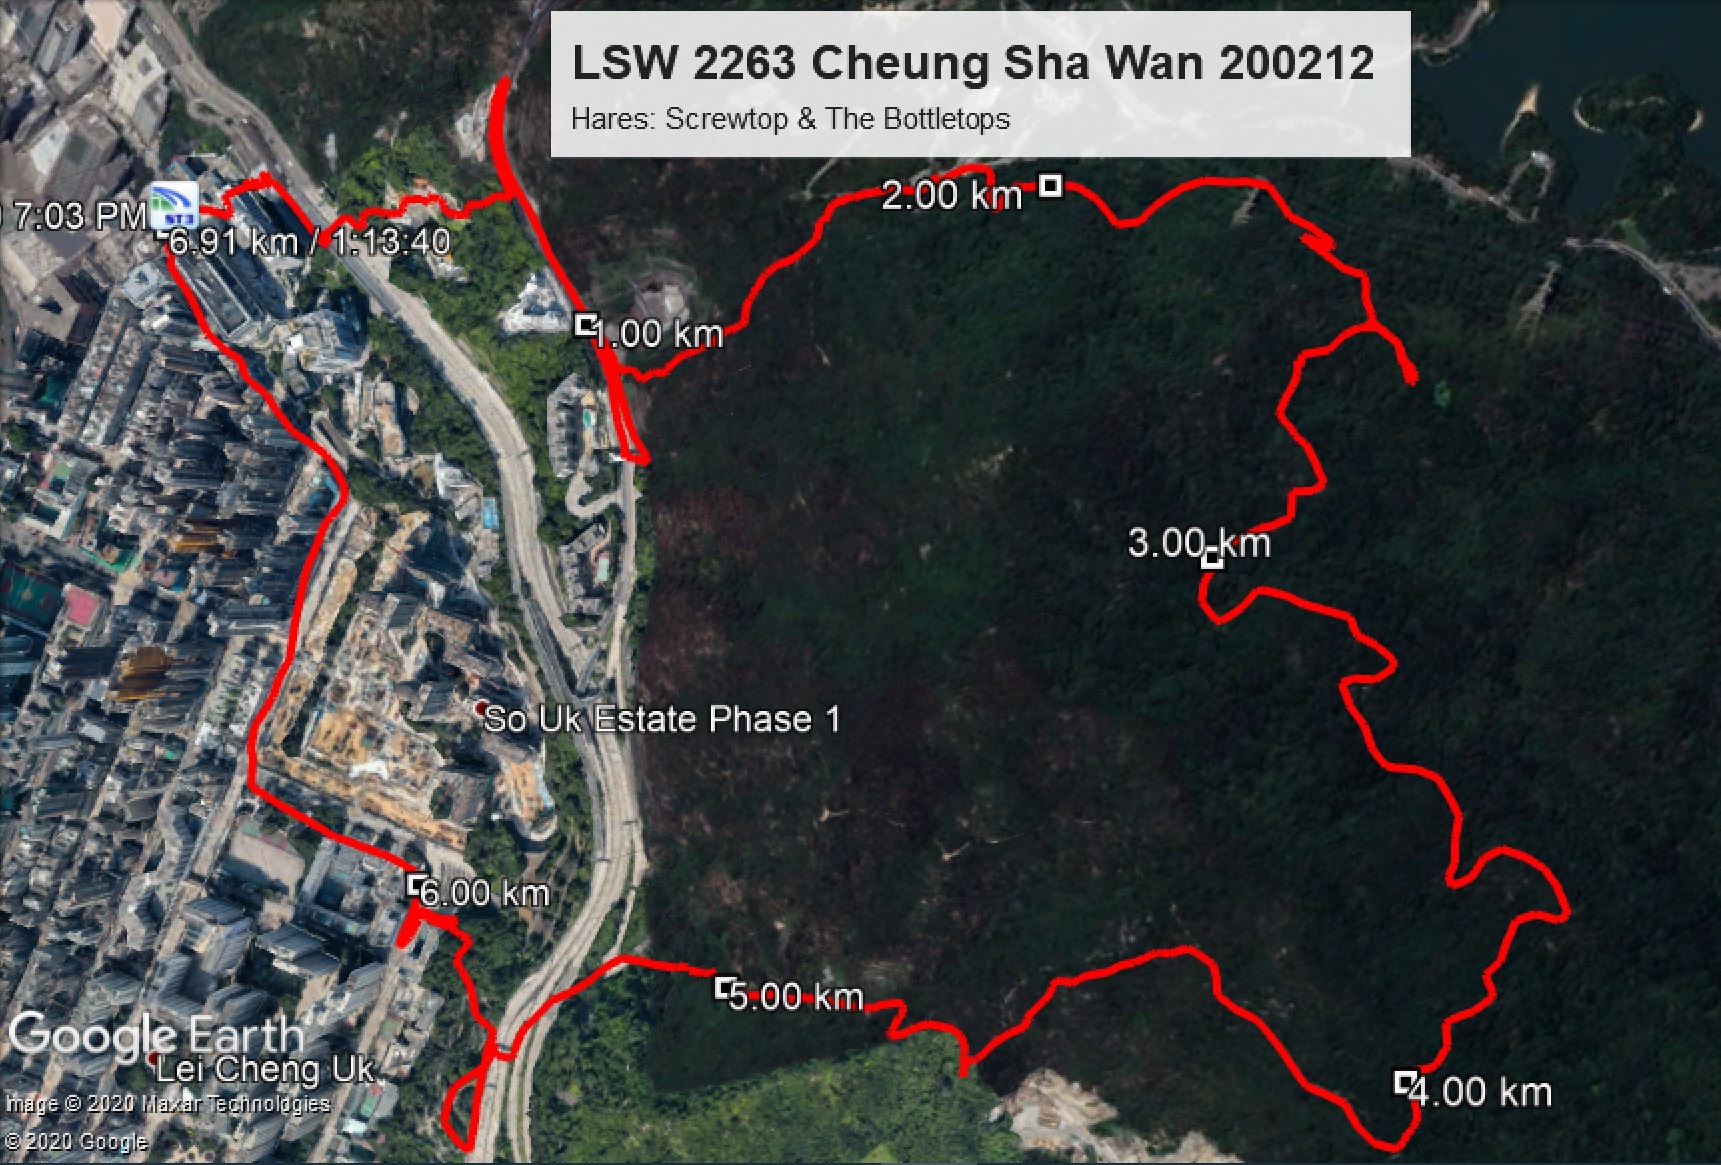 Cheung Sha Wan 200212 6.97km 73mins